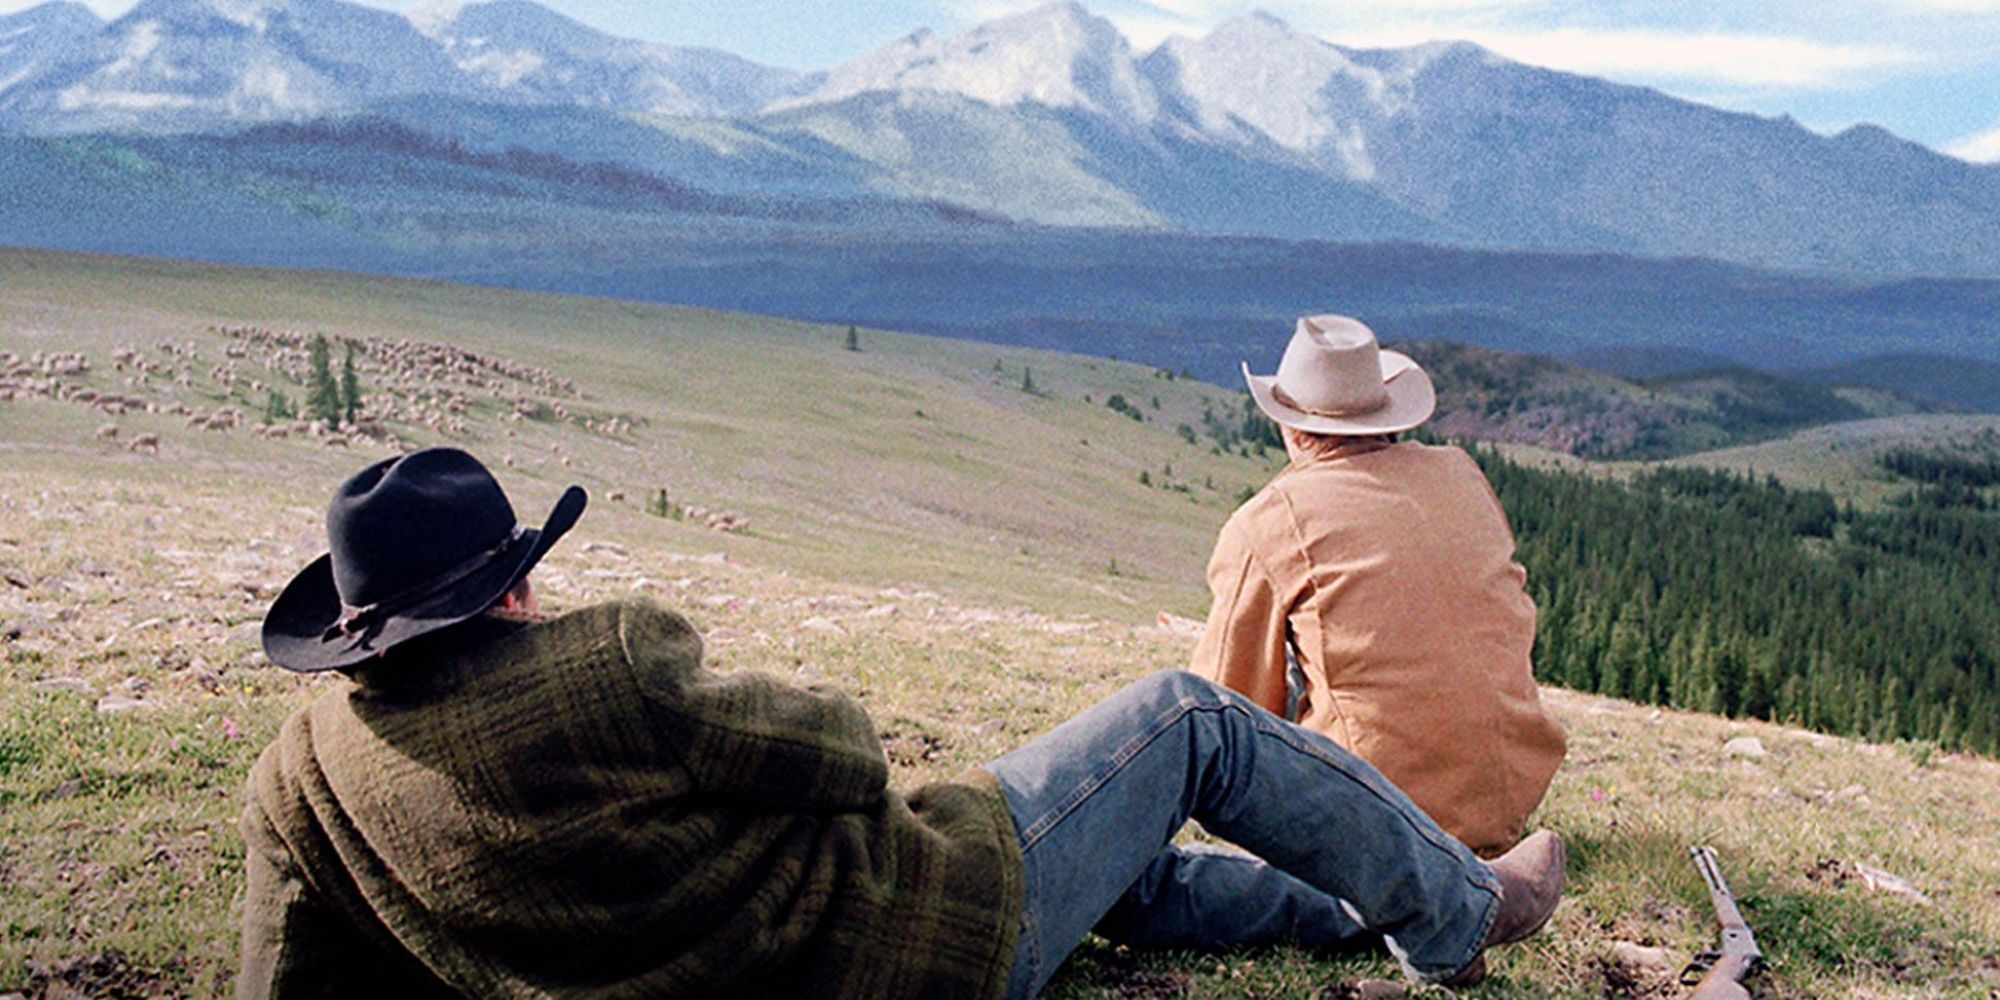 Ennis Del Mar (Heath Ledger) and Jack Twist (Jake Gyllenhaal) survey the Wyoming countryside